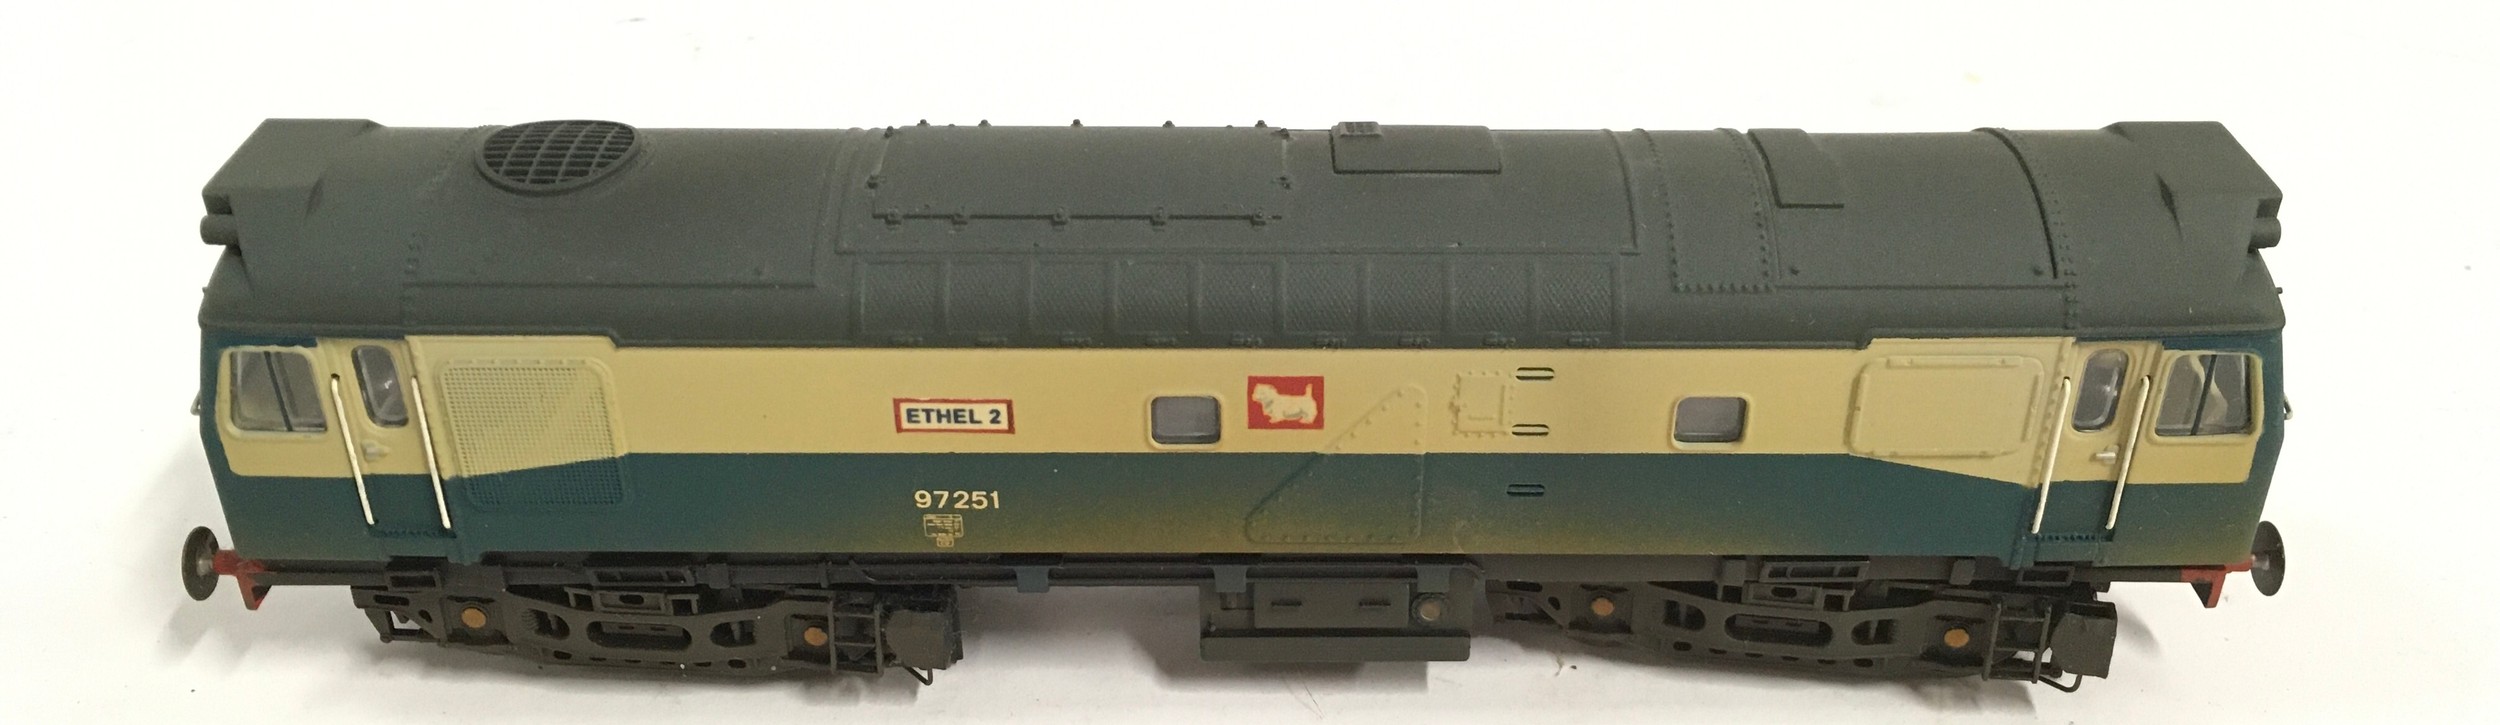 Bachmann OO Gauge Ethel 2 Diesel locomotive 97251 blue grey weathered. Appears Excellent in wrong - Image 2 of 3